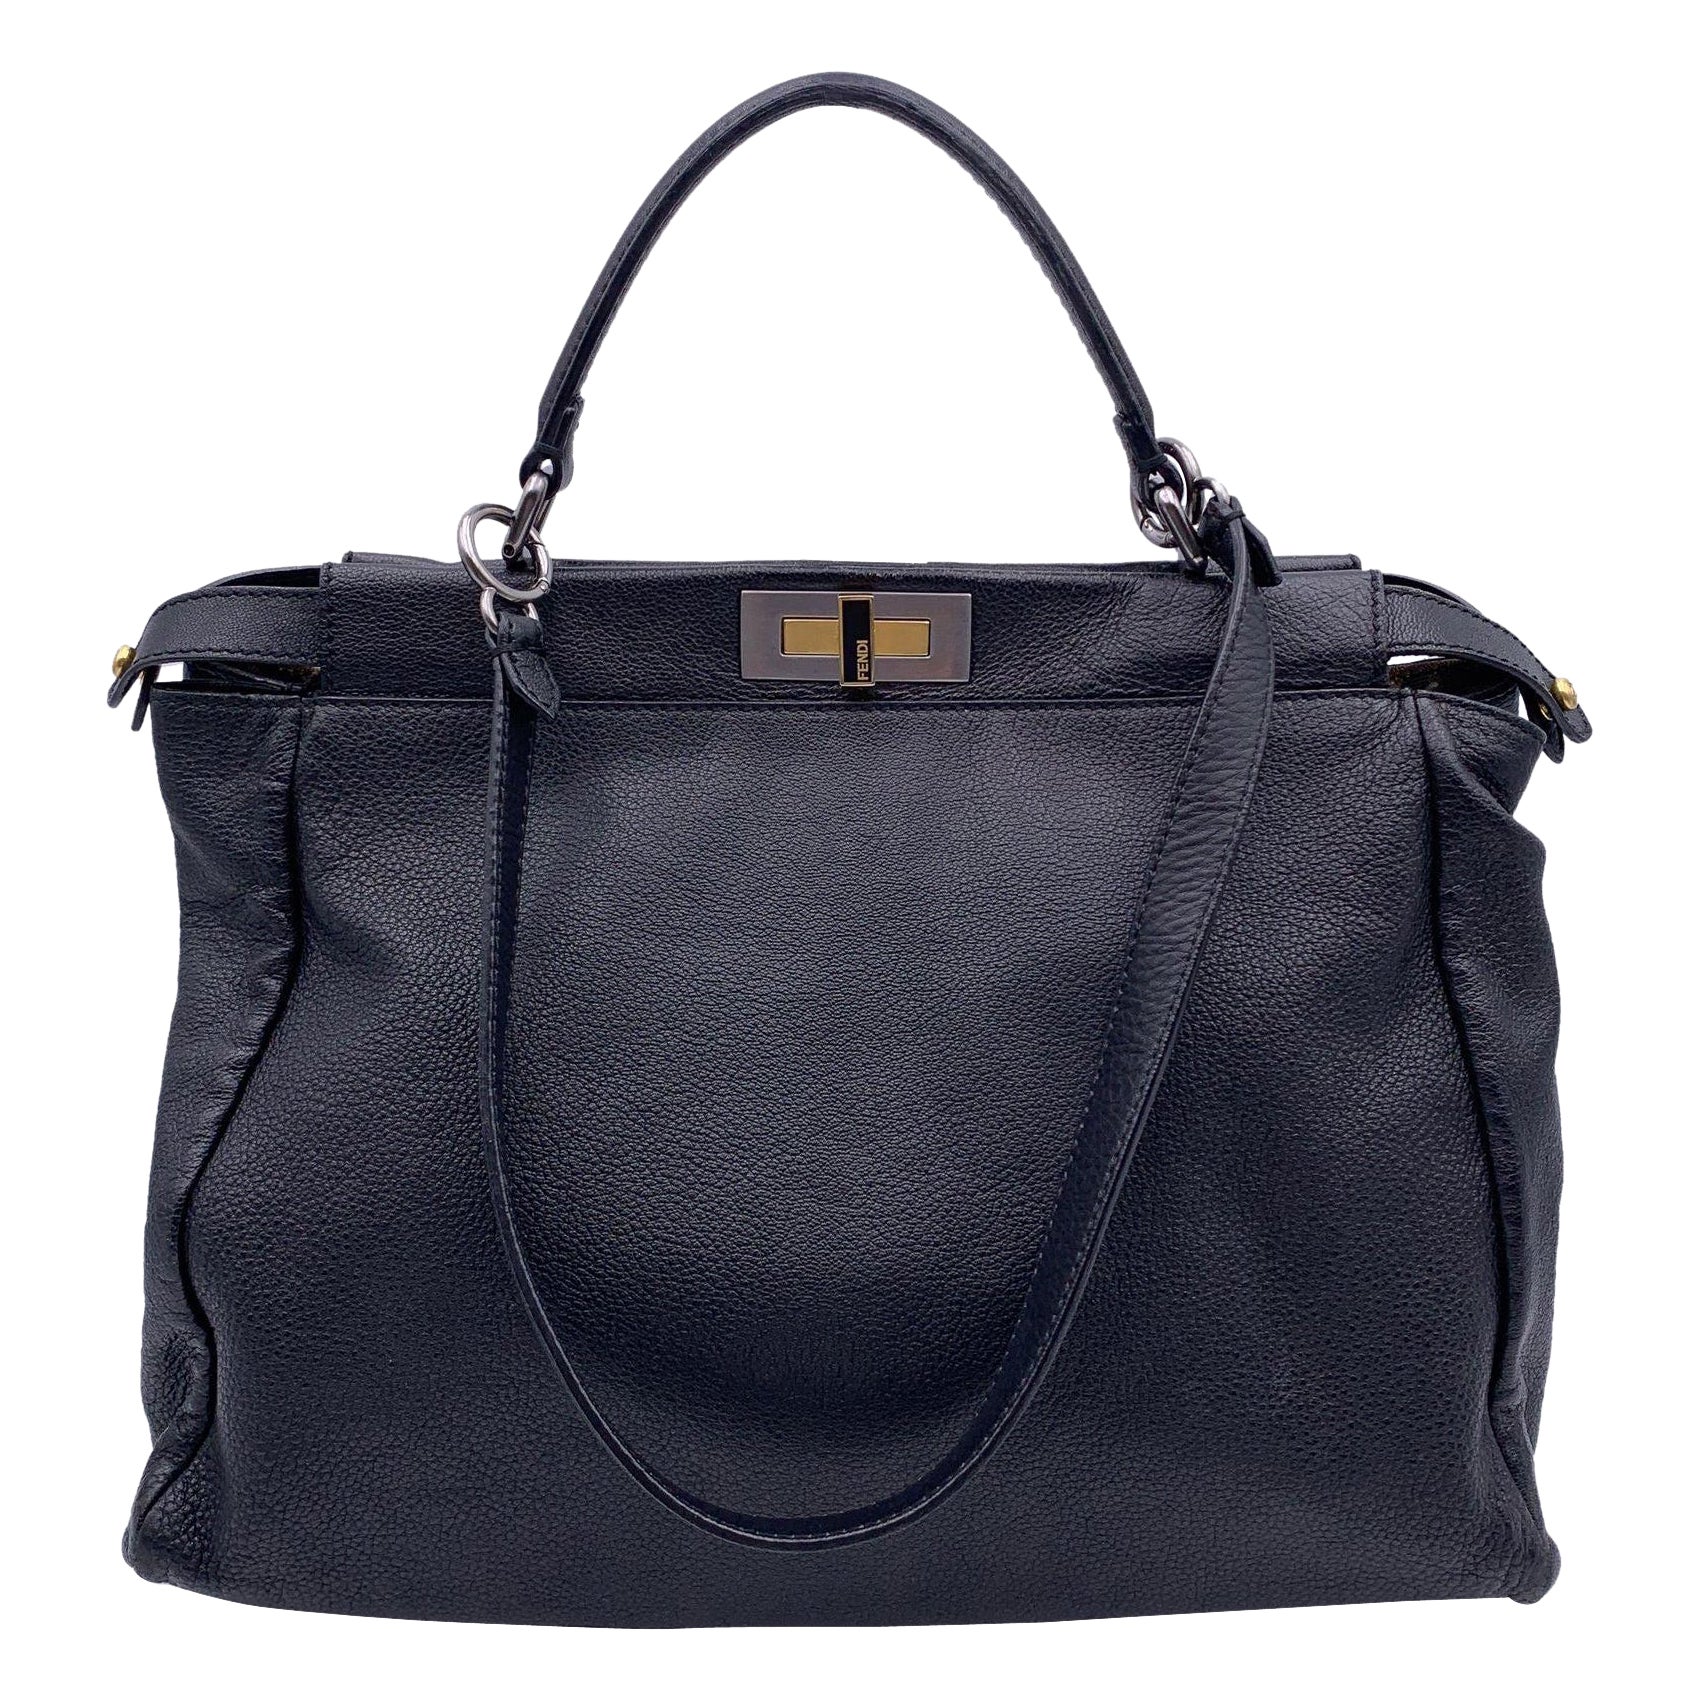 Fendi Black Leather Large Peekaboo Tote Top Handle Shoulder Bag